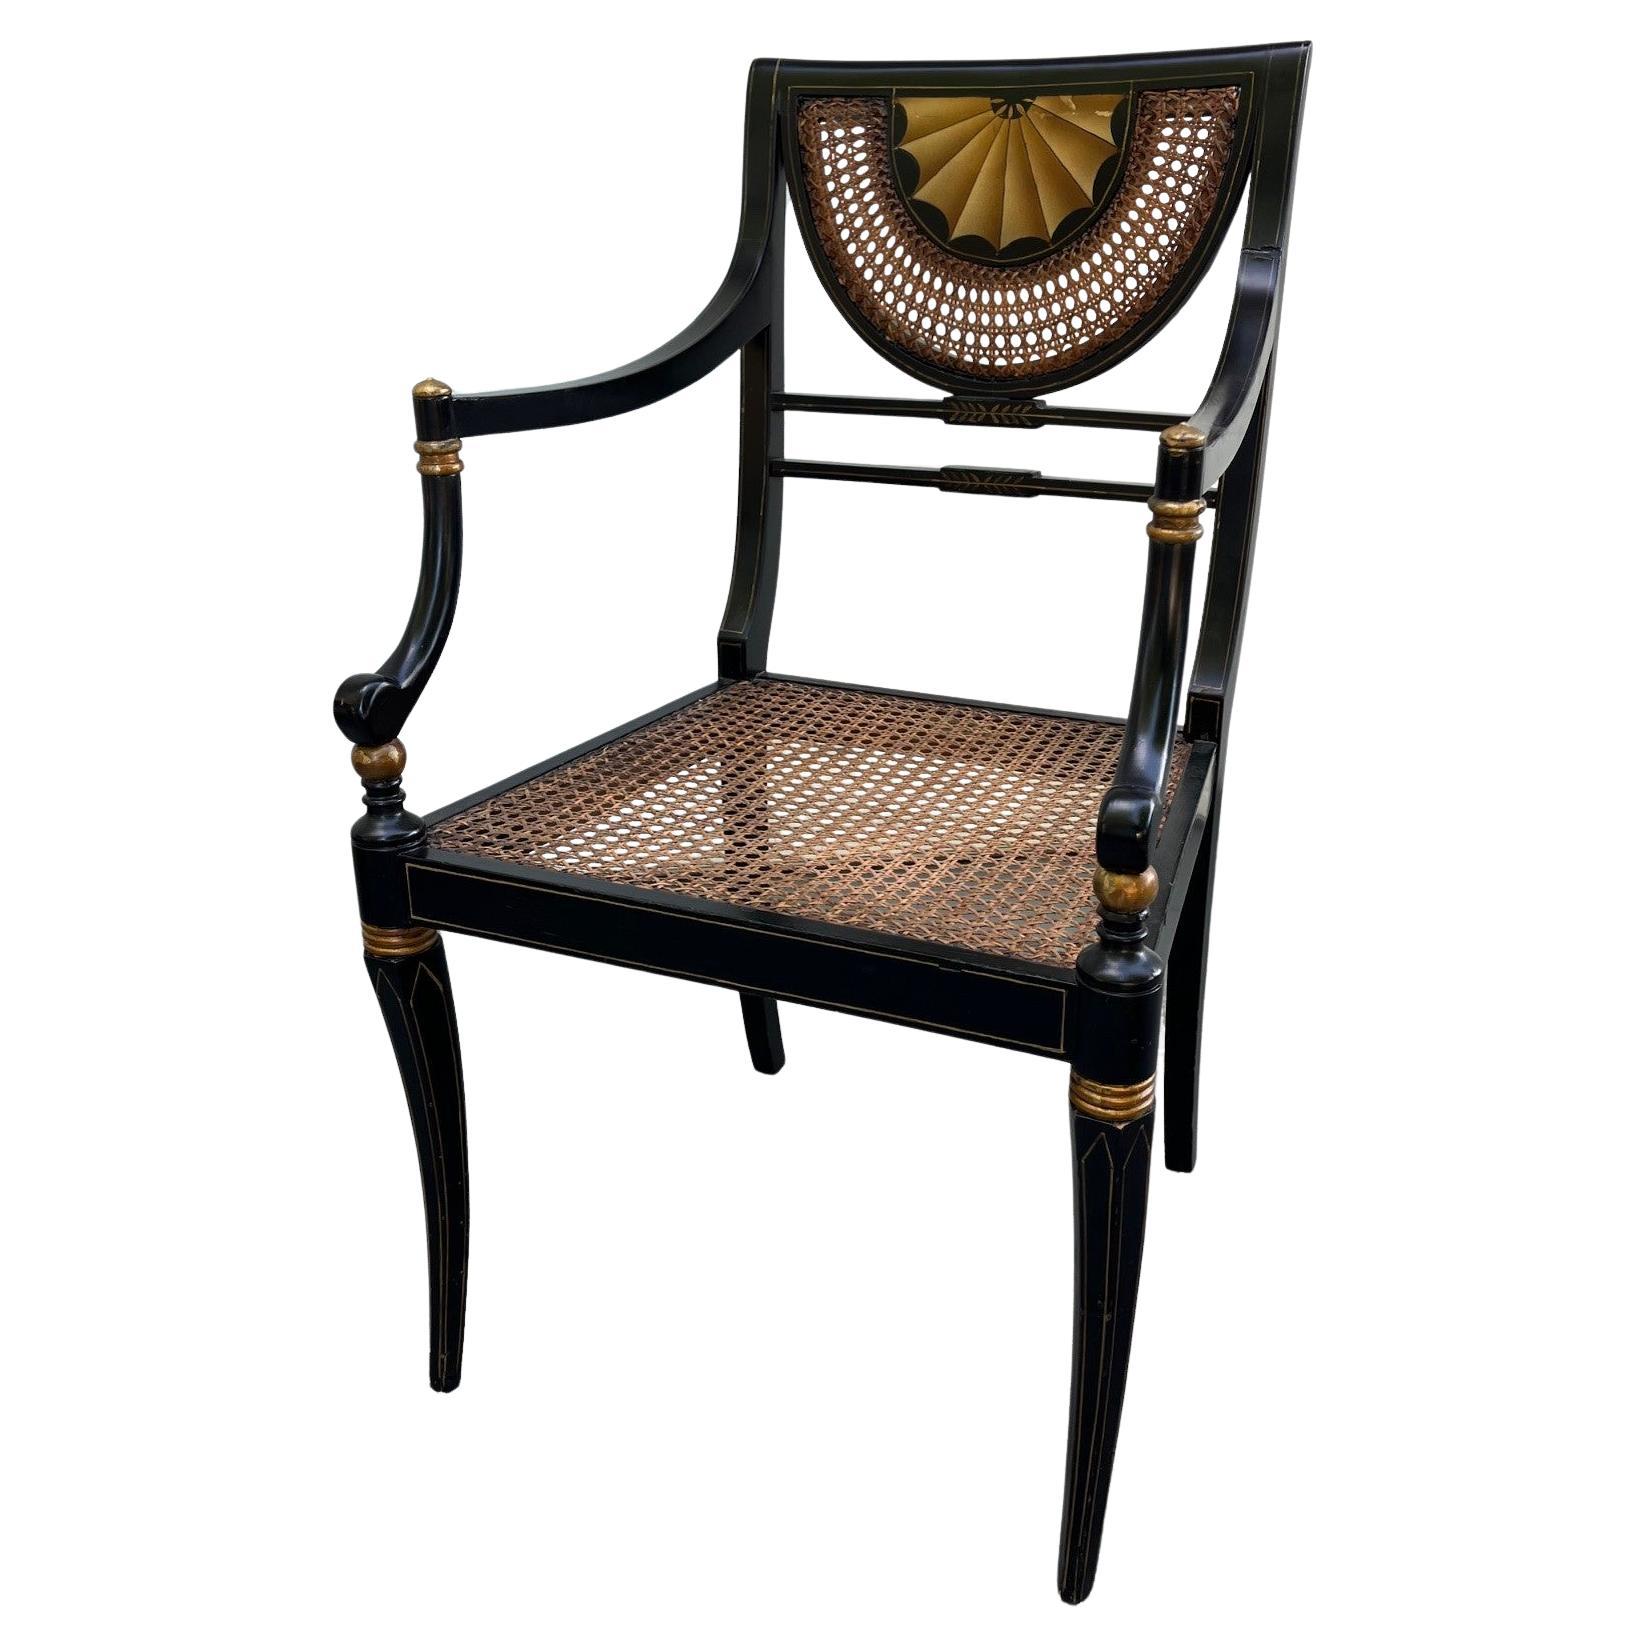 Vintage Regency Style Ebonized Armchair with Cane Seat.